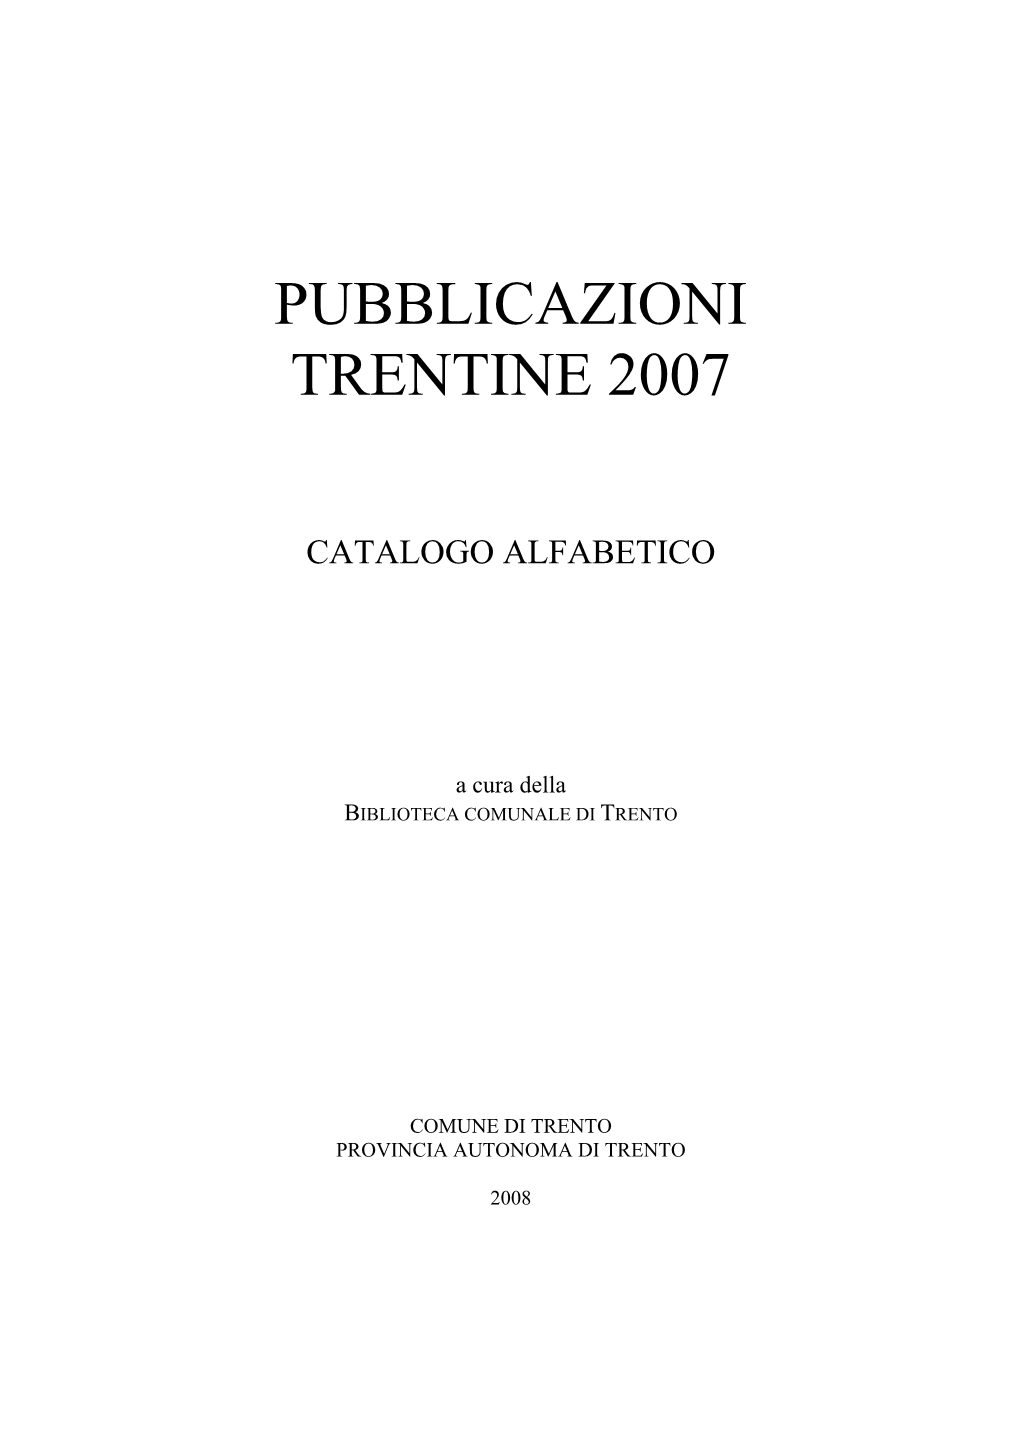 Pubblicazioni Trentine 2007